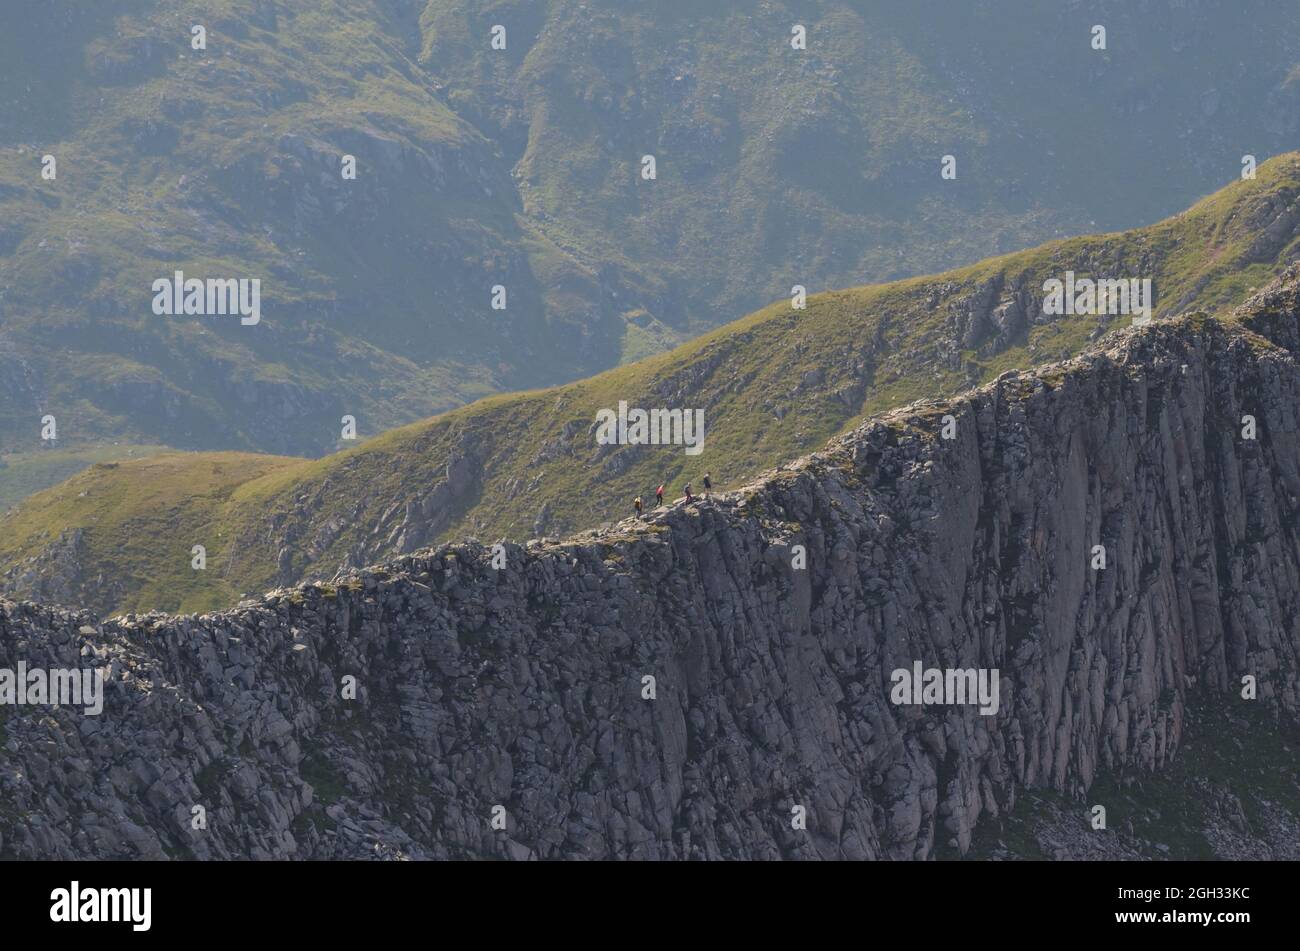 The Càrn Mòr Dearg Arête, a narrow ridge running between the mountains Carn Mor Dearg and Ben Nevis, Scottish Highlands. Stock Photo